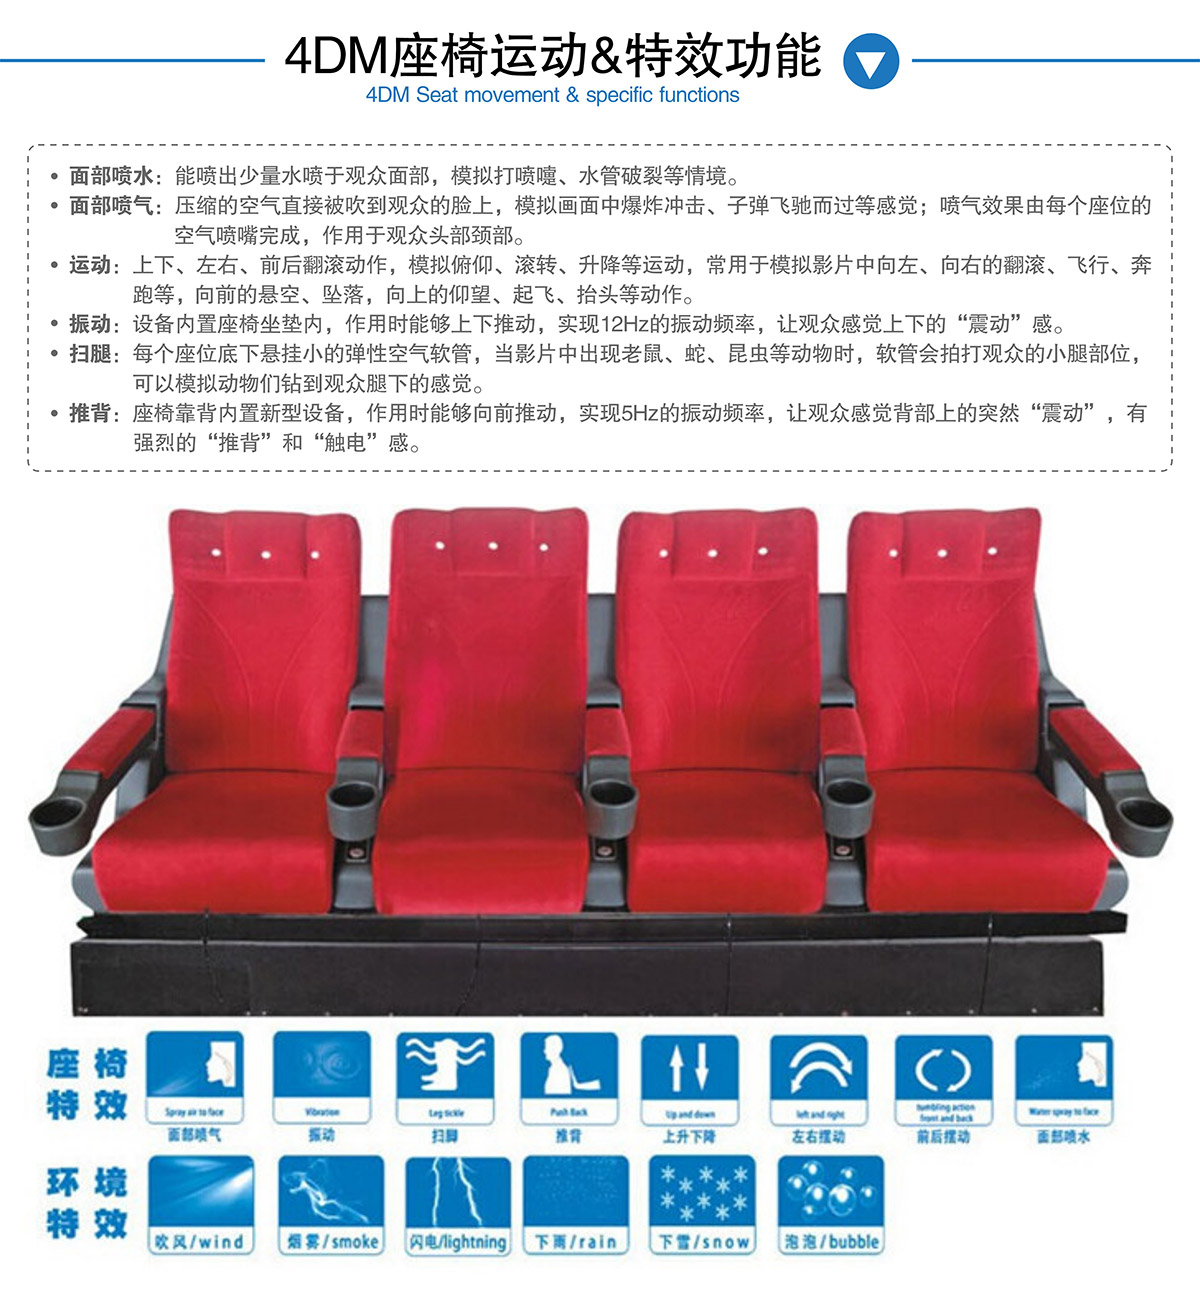 AR戒毒4DM座椅运动和特效功能.jpg